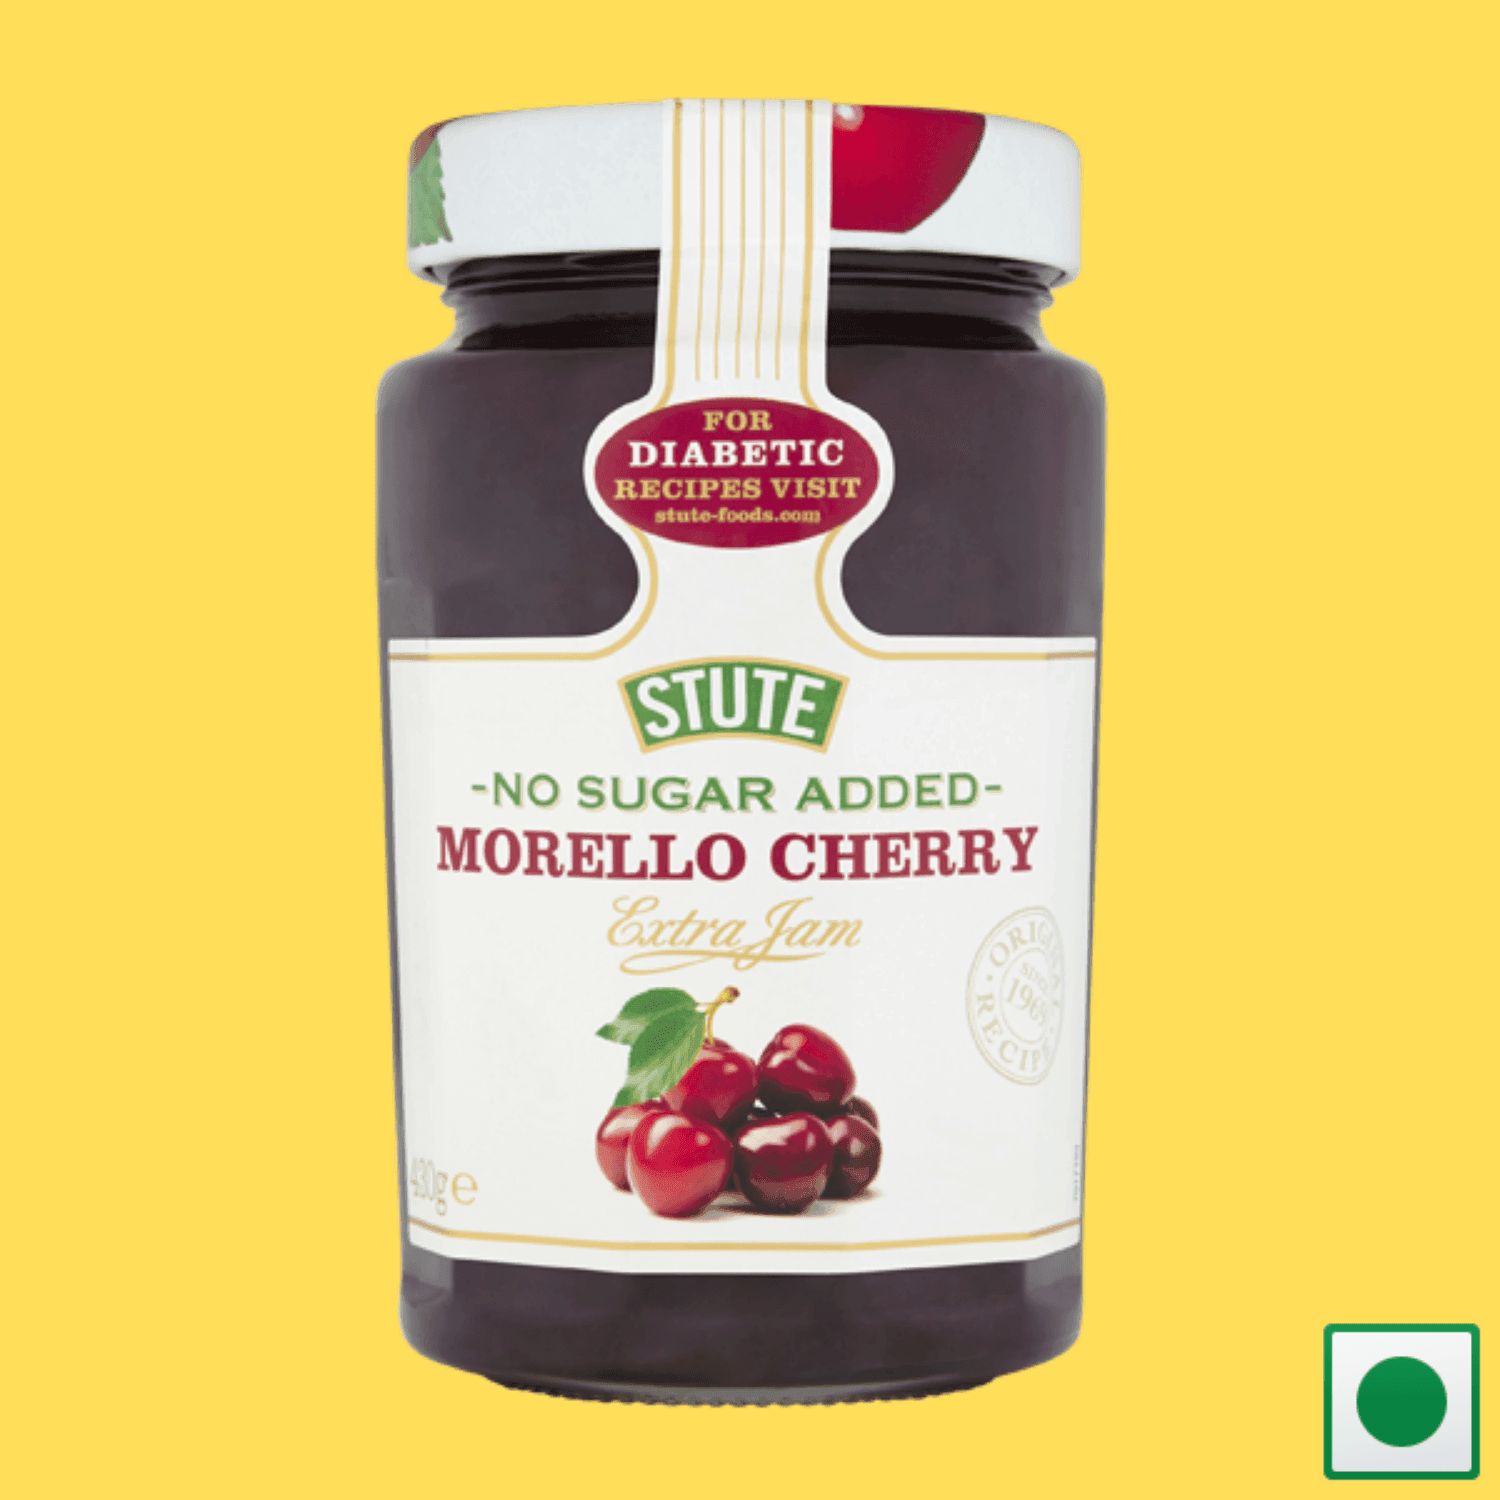 Stute Morello Cherry Sugar Free Jam, 430g (Imported) - Super 7 Mart